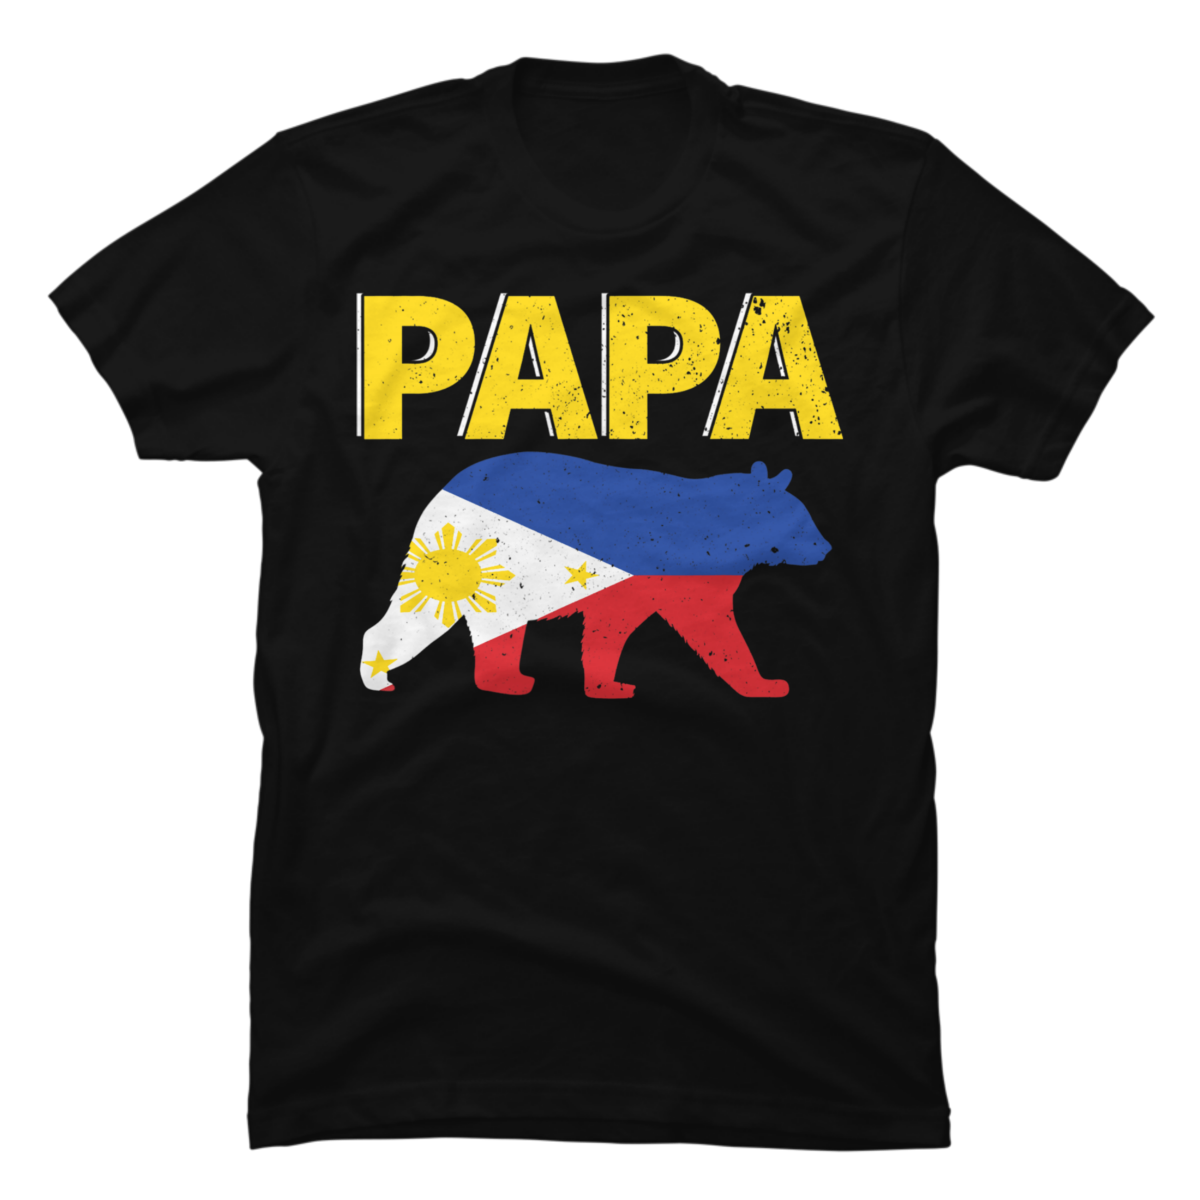 philippine flag shirt